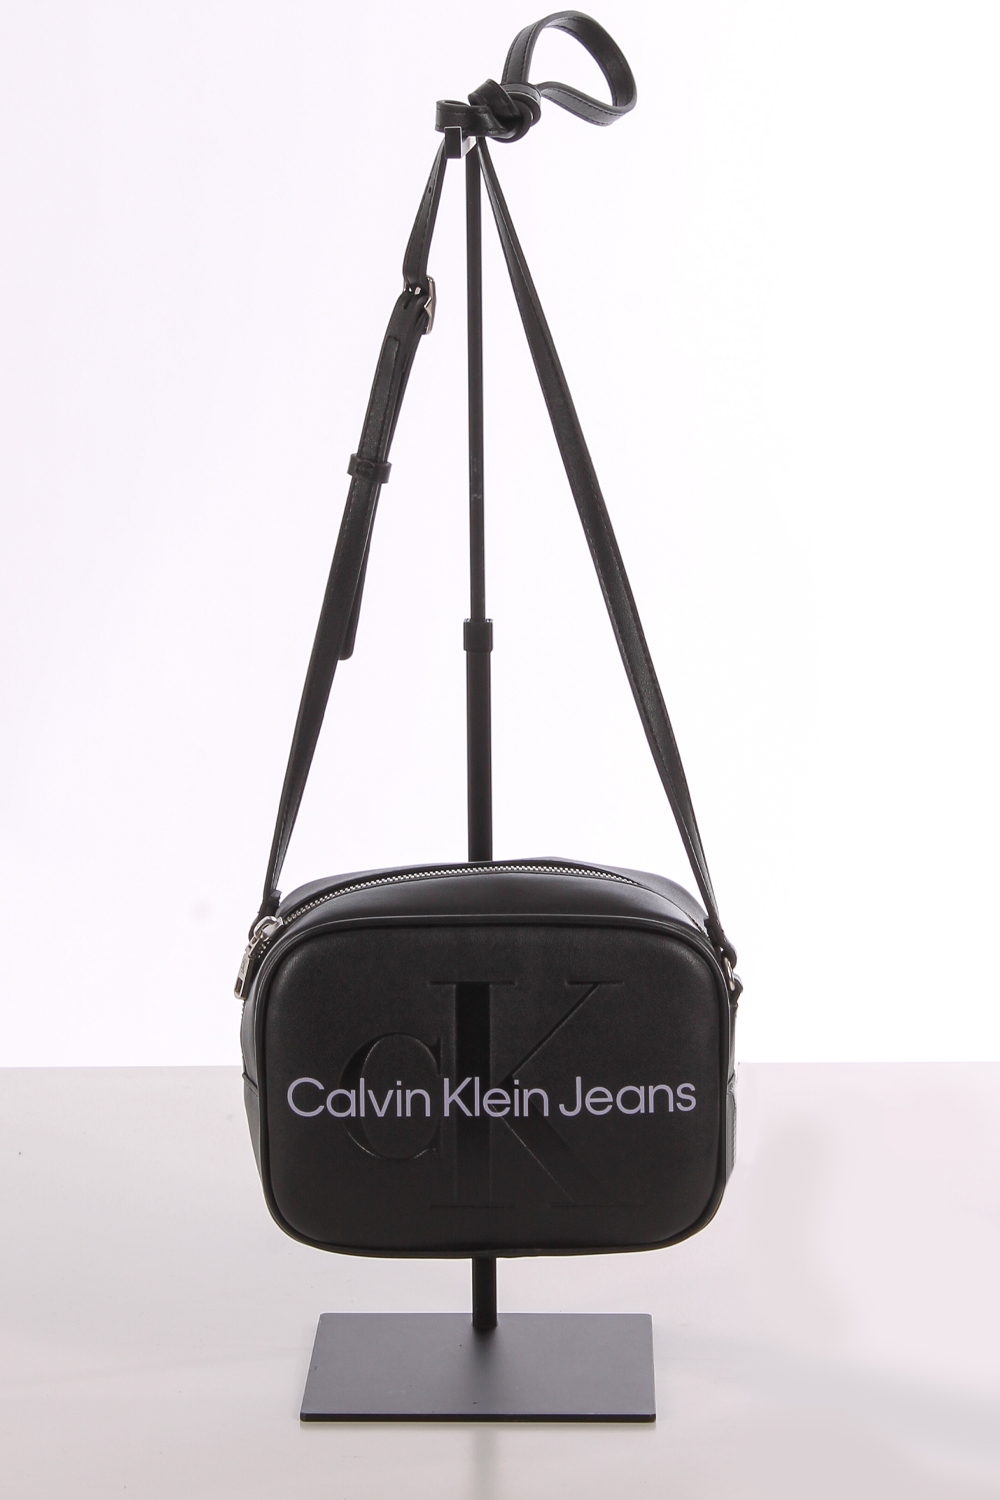 CALVIN KLEIN JEANS Women's Shoulder Bag With Monogram Print, 45% OFF